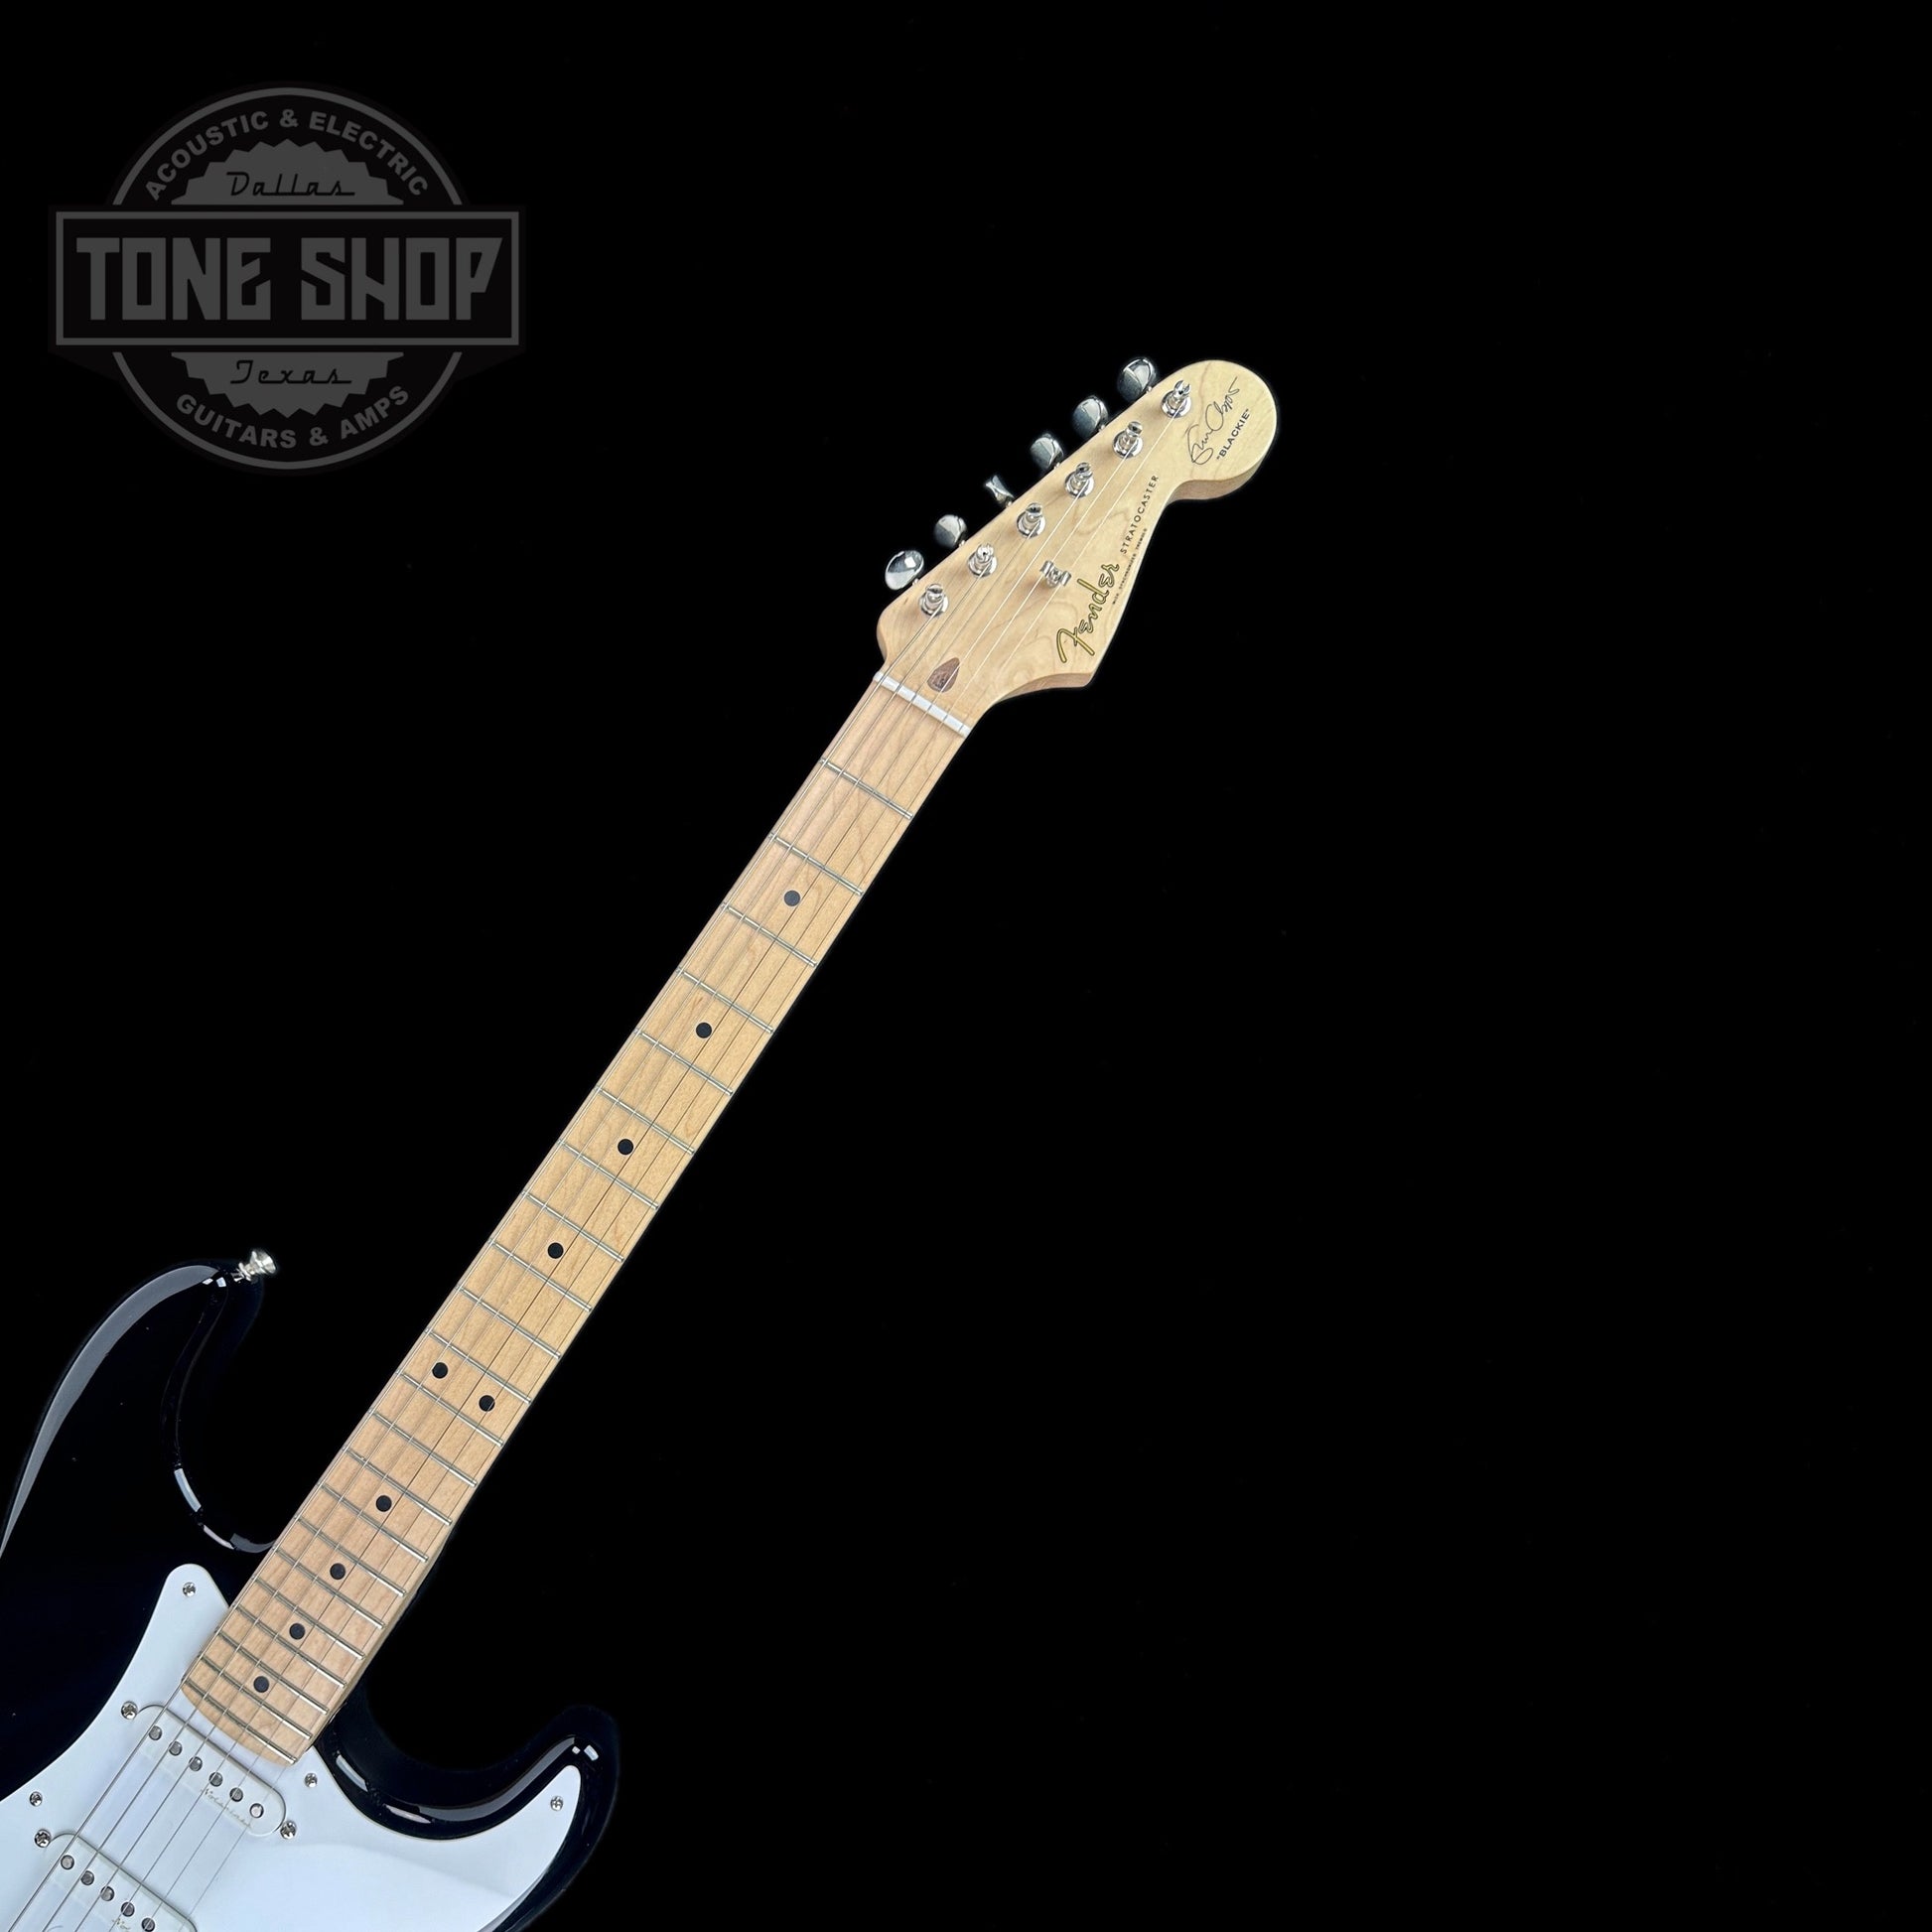 Fretboard of Used Fender Eric Clapton "Blackie" Strat.